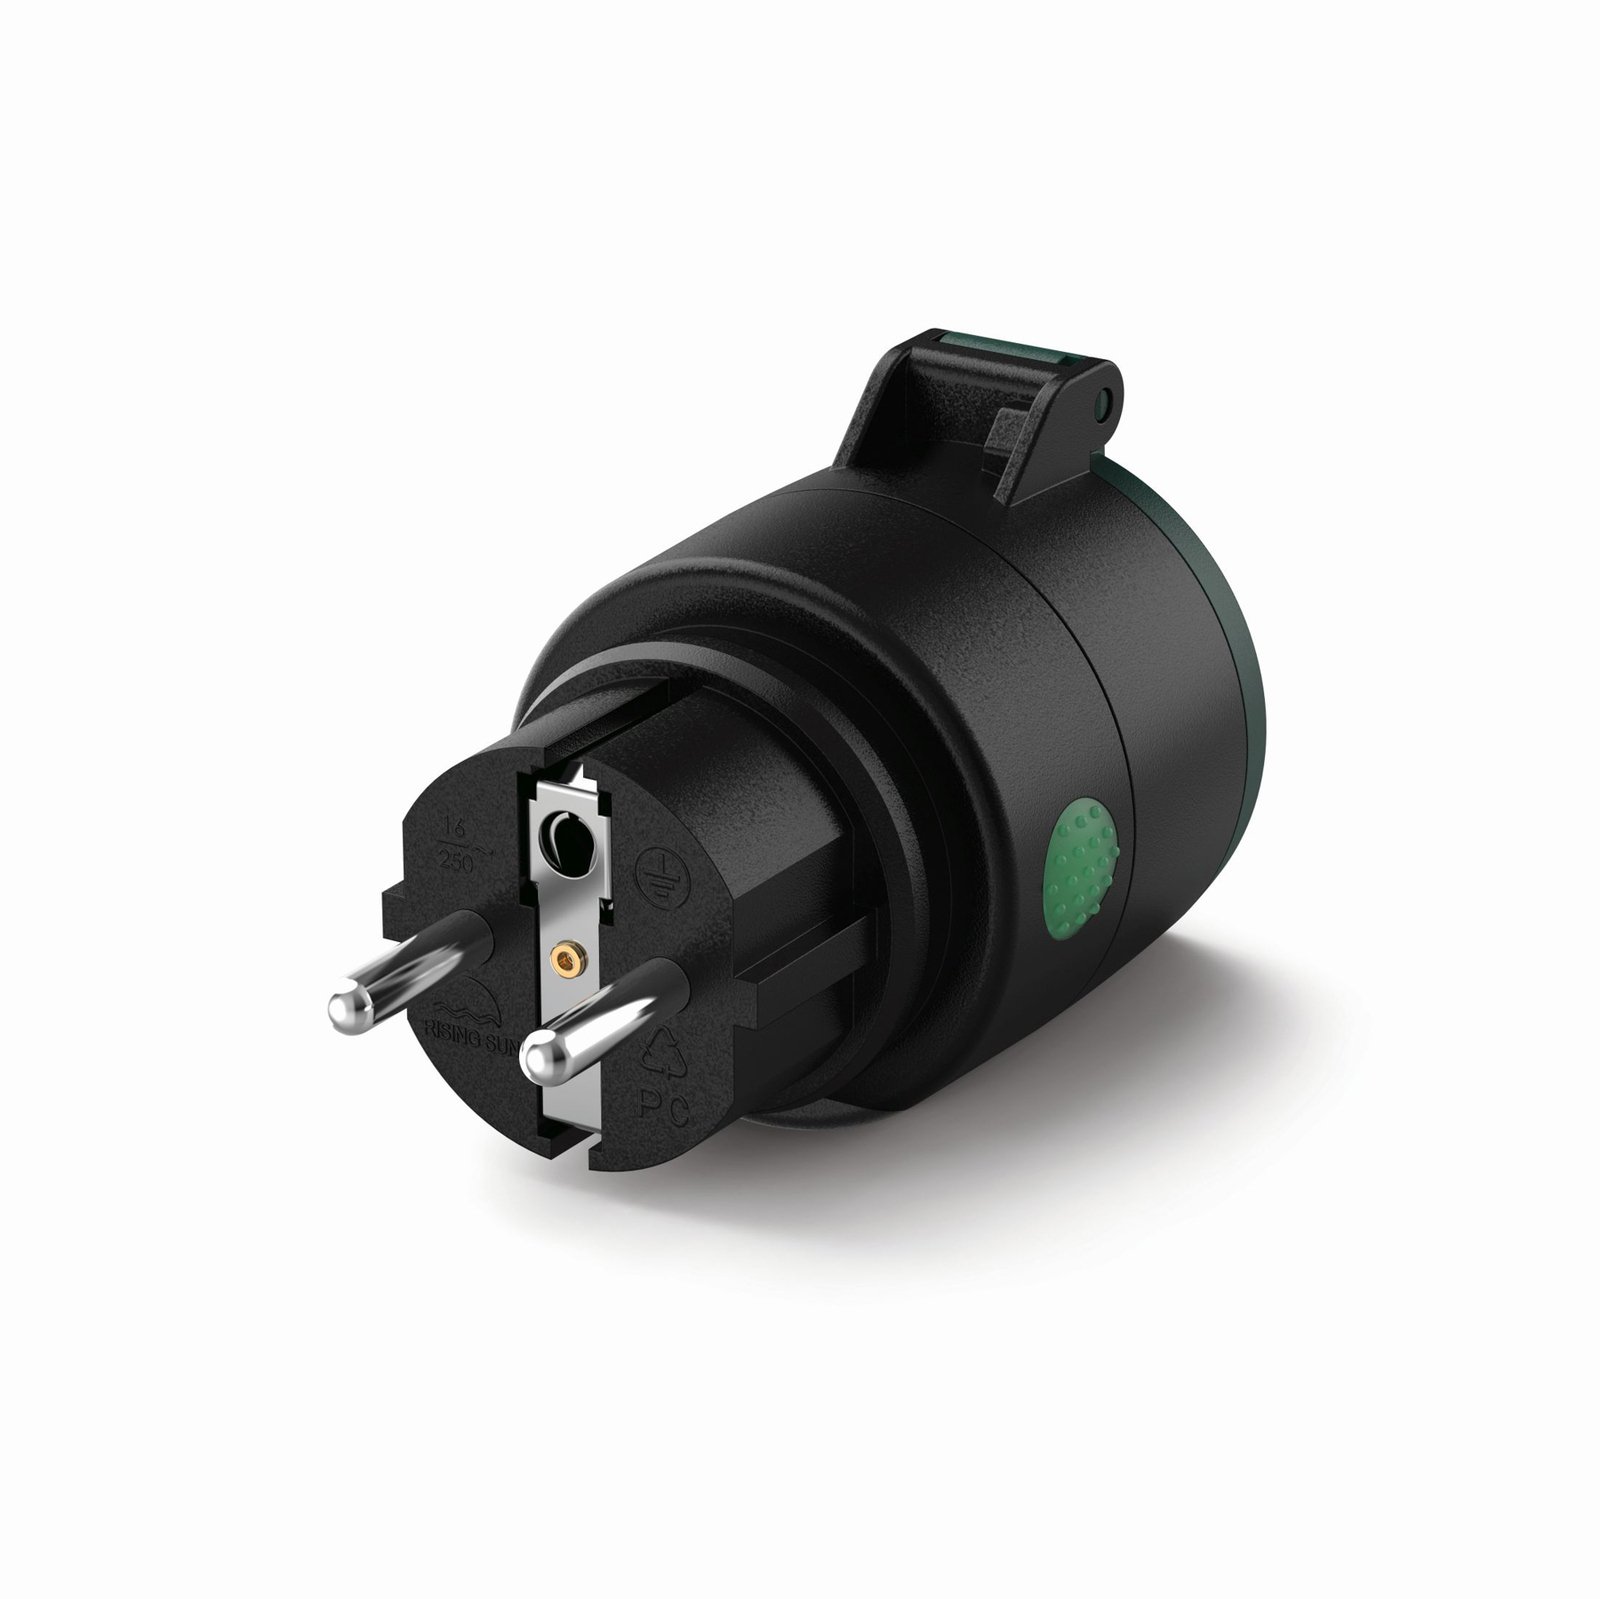 Enchufe Innr Outdoor Smart Plug, IP44, plástico, negro